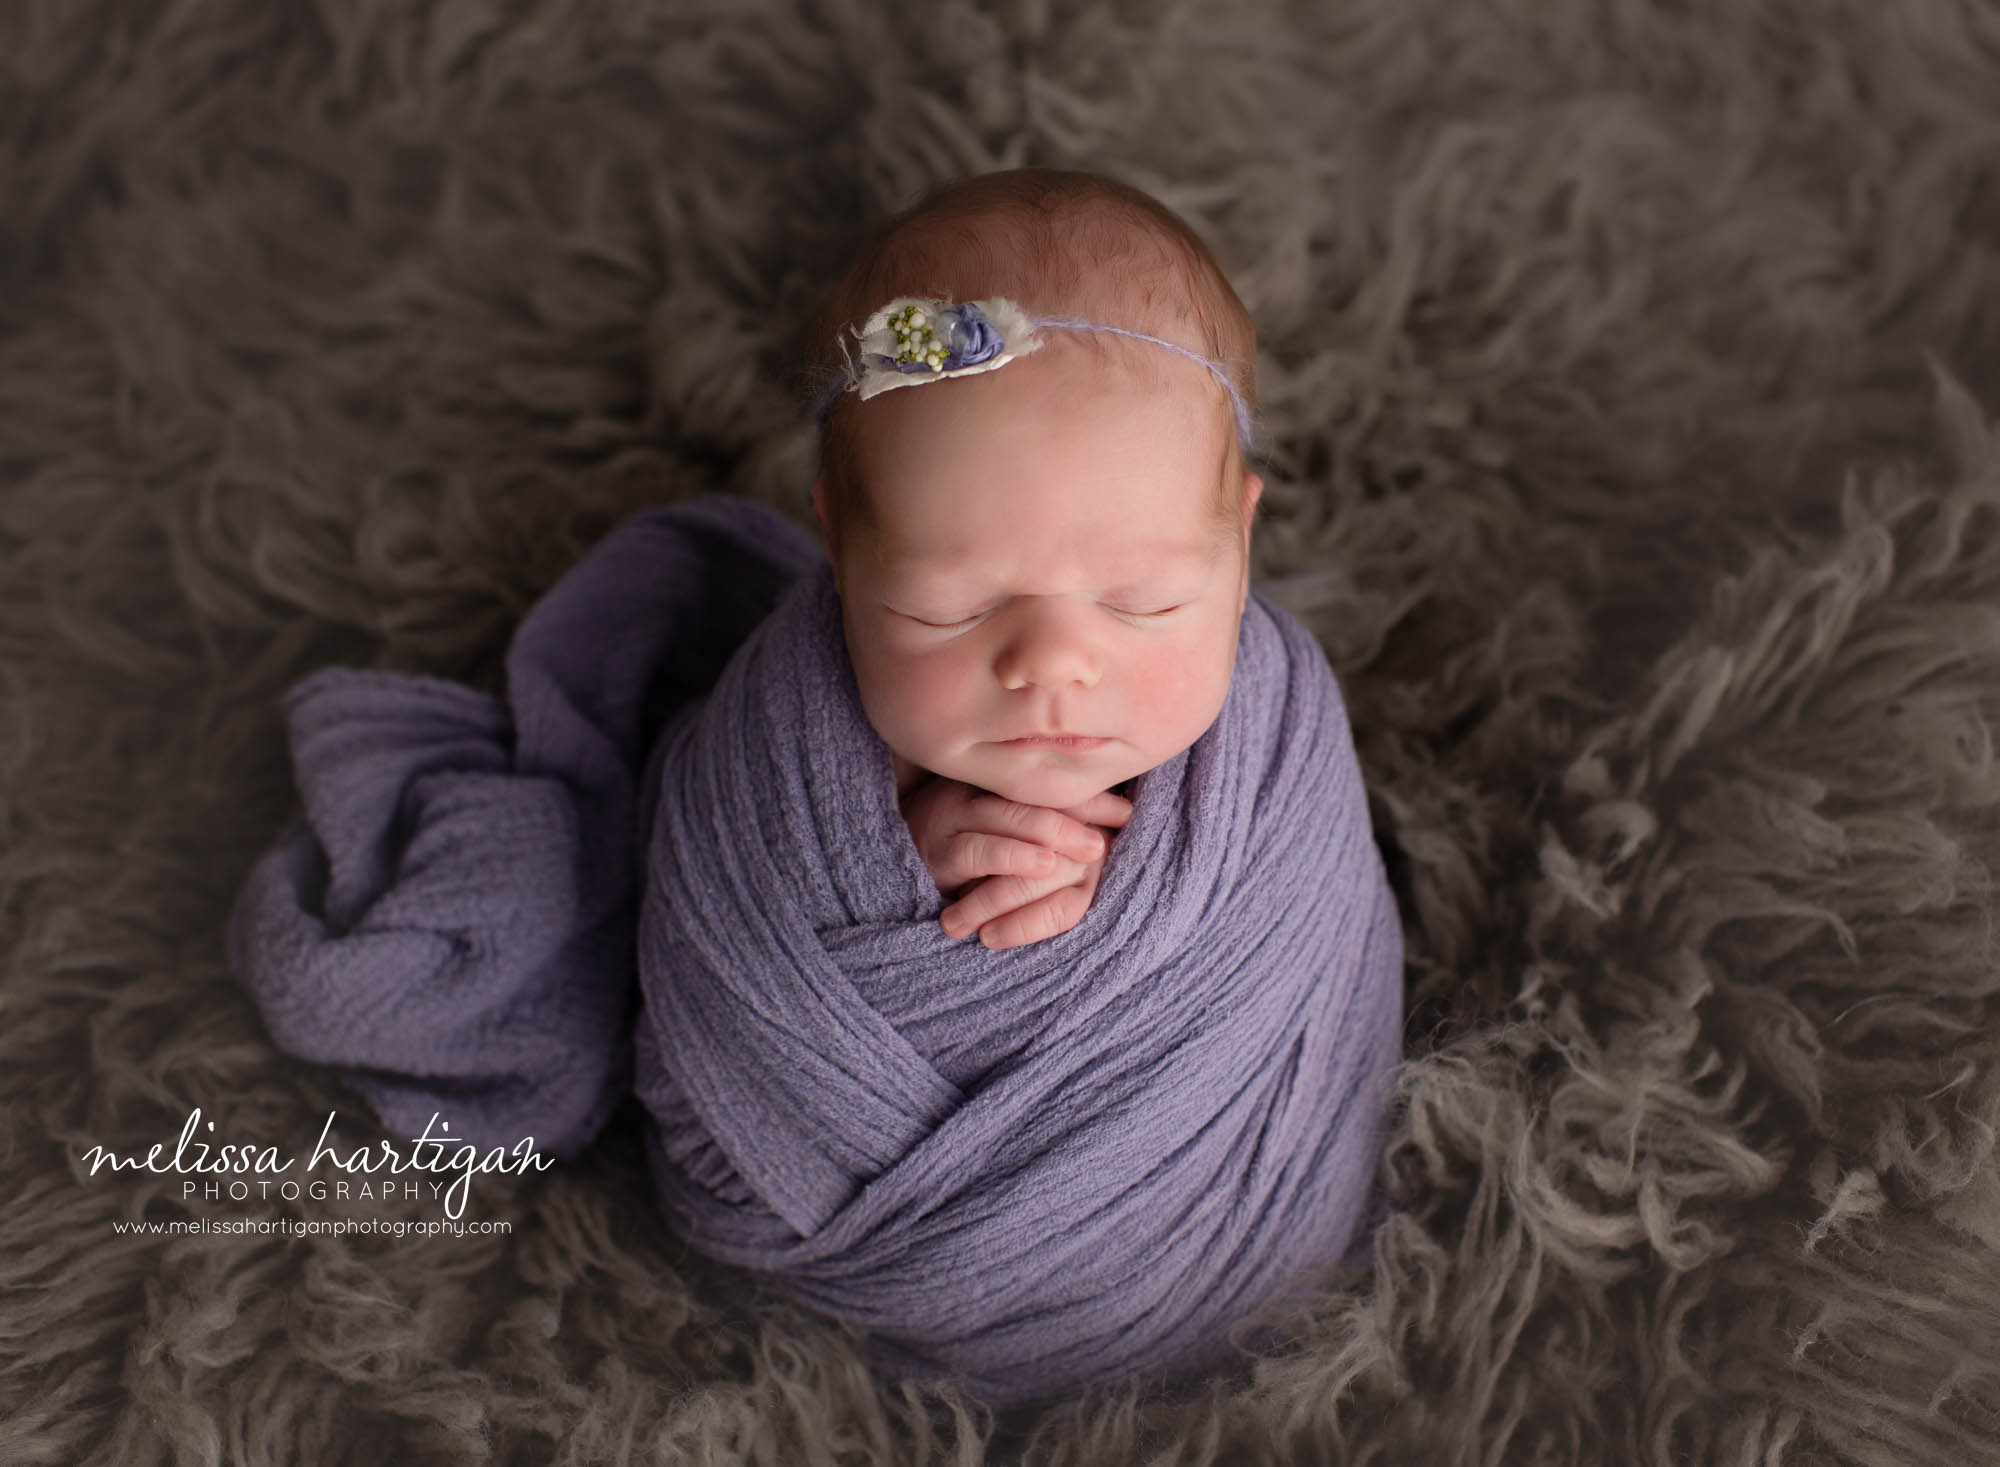 newborn baby girl wrapped in purple wrap posed on grey gray flokati